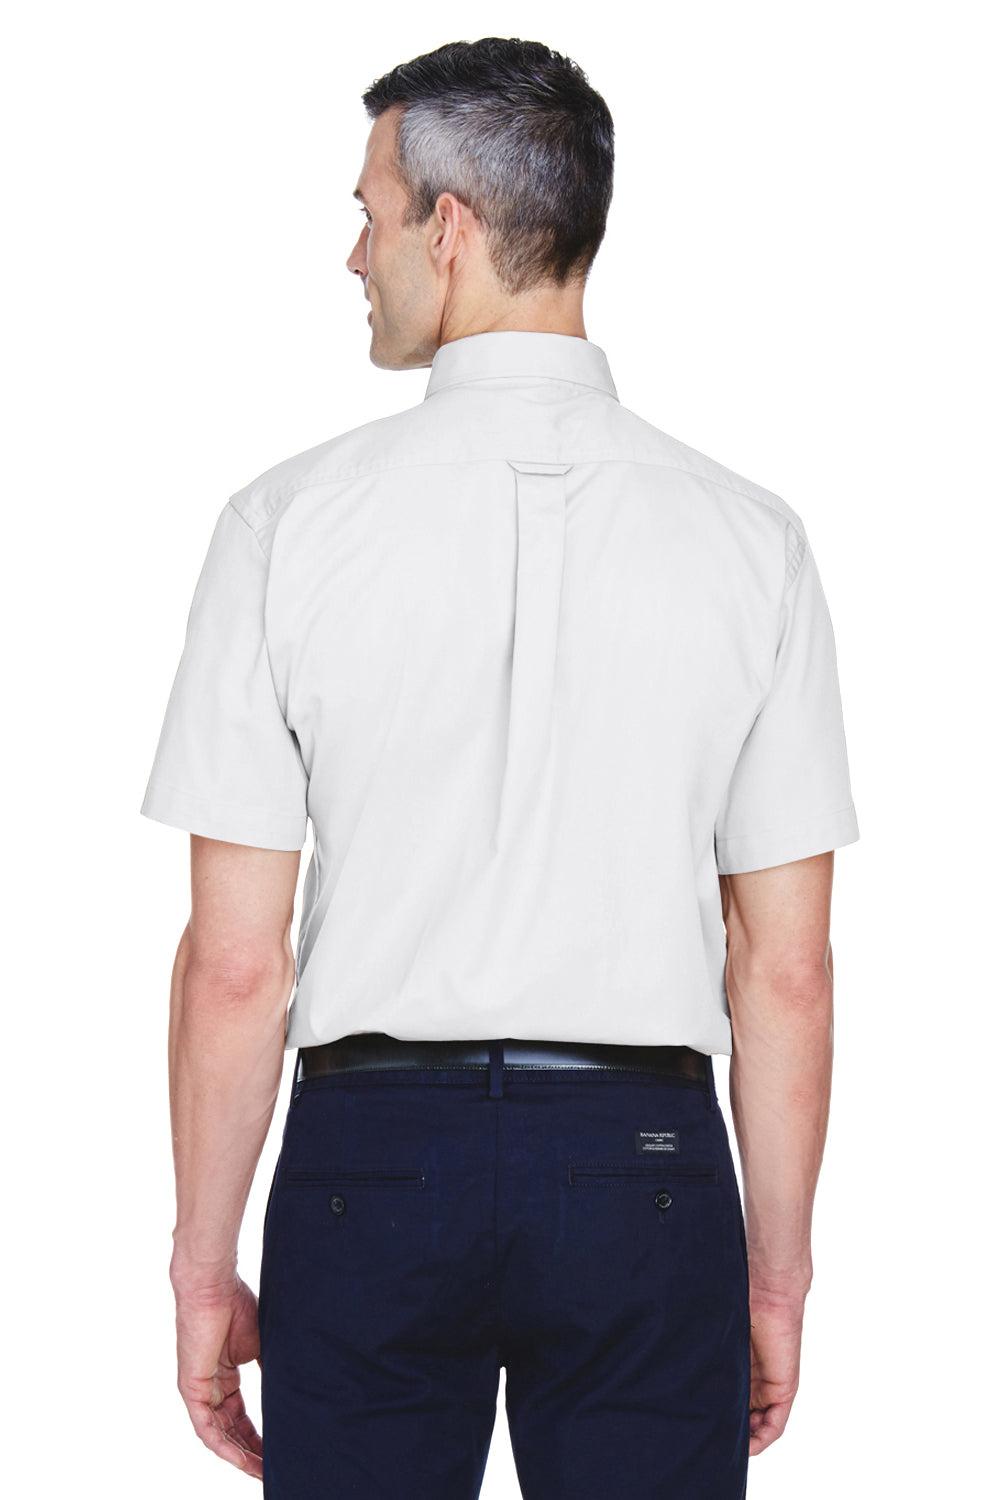 Harriton M500S Mens Wrinkle Resistant Short Sleeve Button Down Shirt w/ Pocket White Back